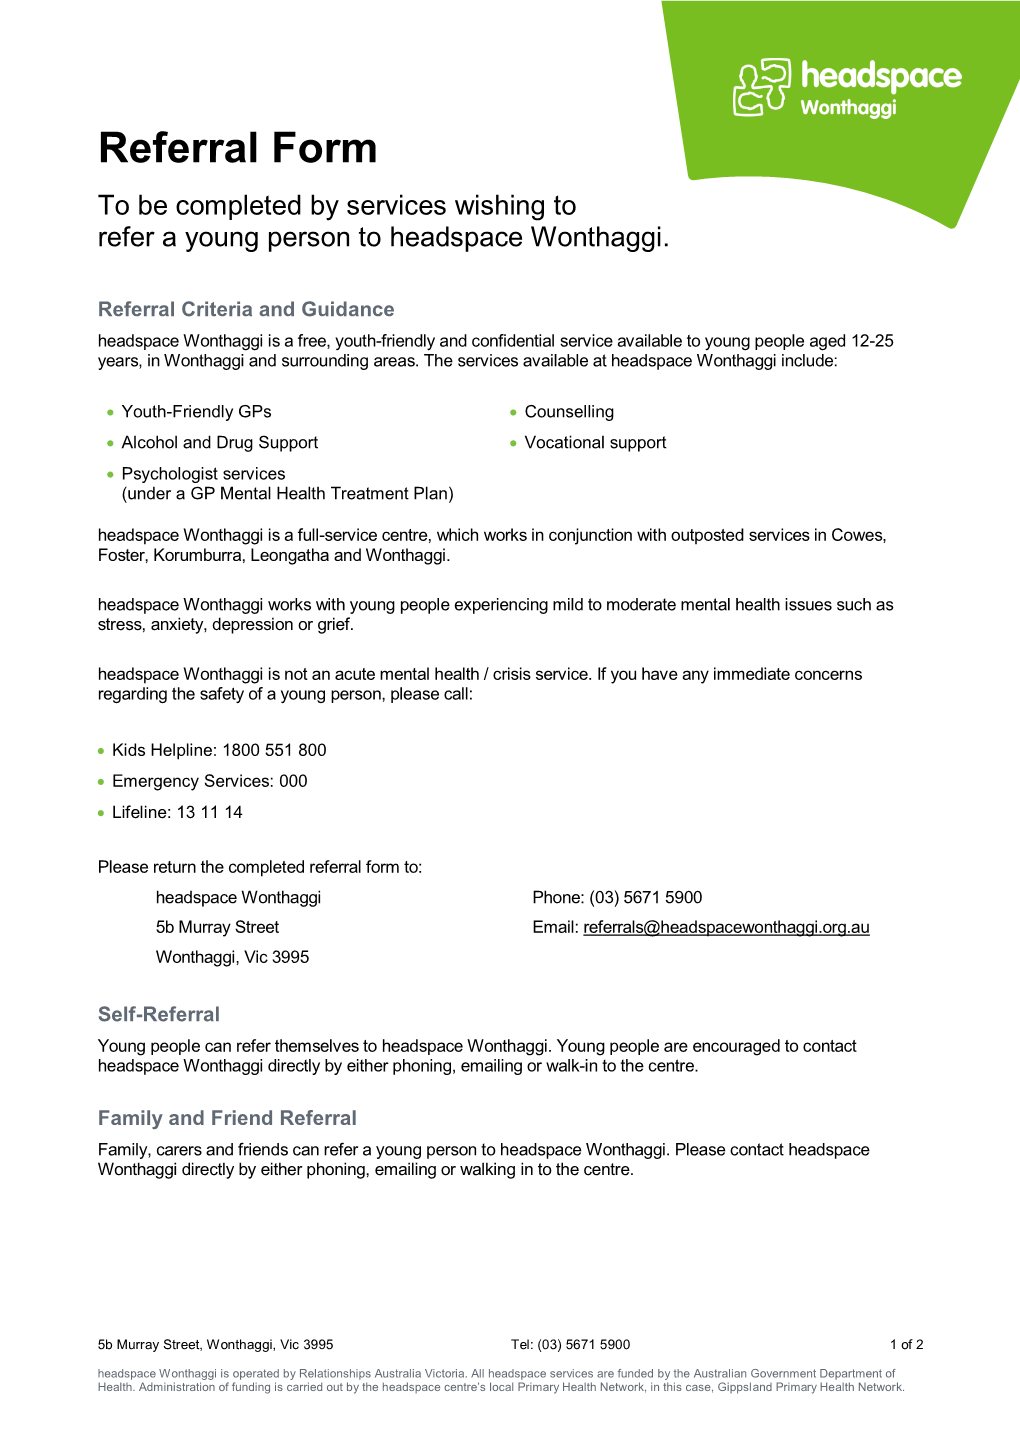 Headspace-Wonthaggi-Referral-Form-June-2021.Pdf